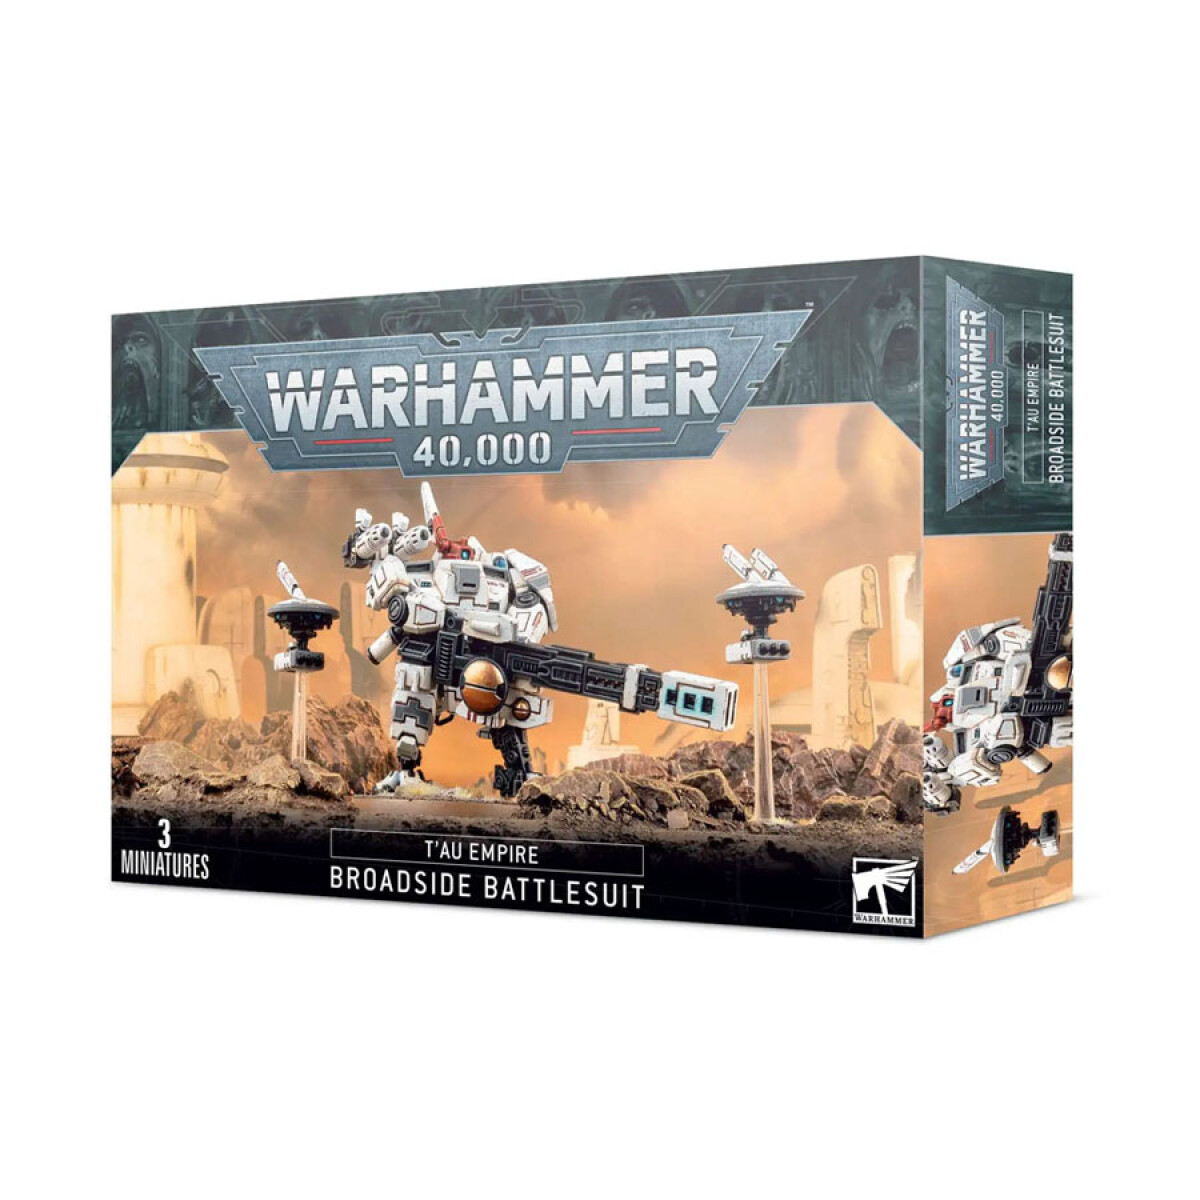 Warhammer 40,000 - T'au Empire Broadside Battlesuit - 3 Miniatures 